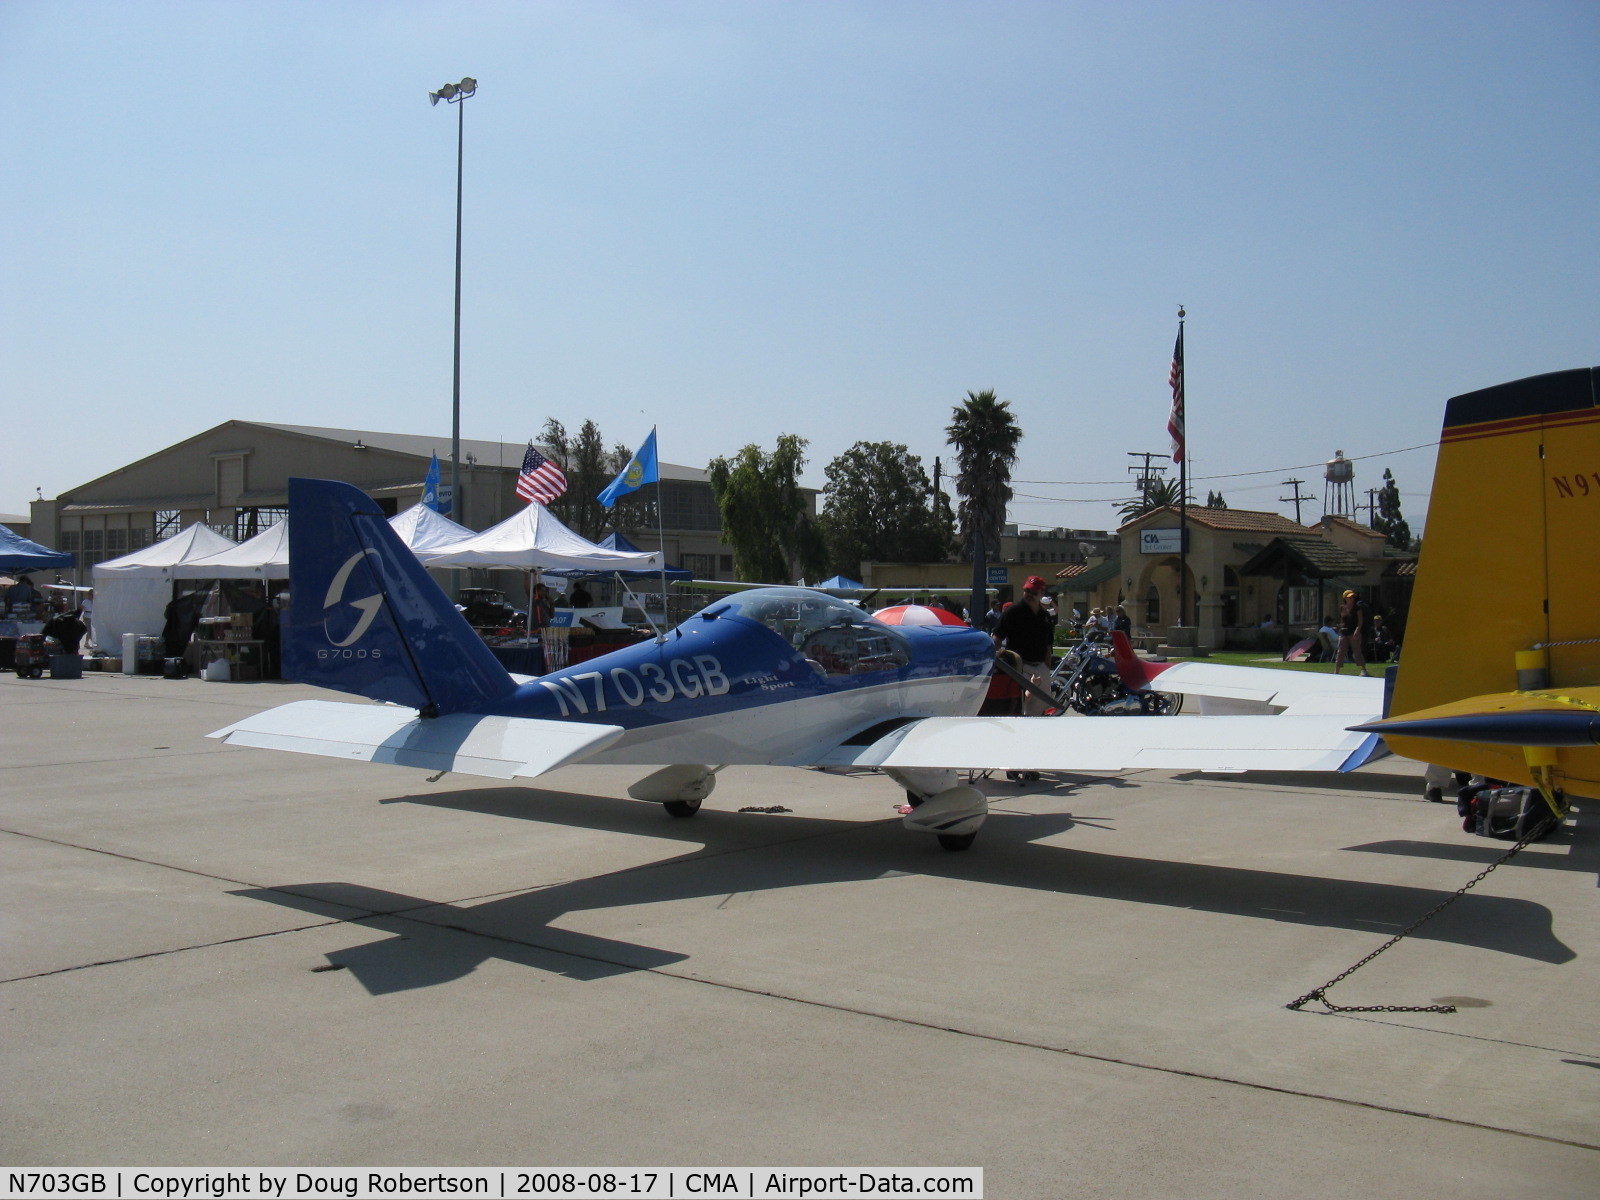 N703GB, 2007 Aero AT-4 LSA C/N AT4-003, 2007 Aero Sp Z O O AT-4 G700S, Rotax 912 ULS 100 Hp, tri-blade prop